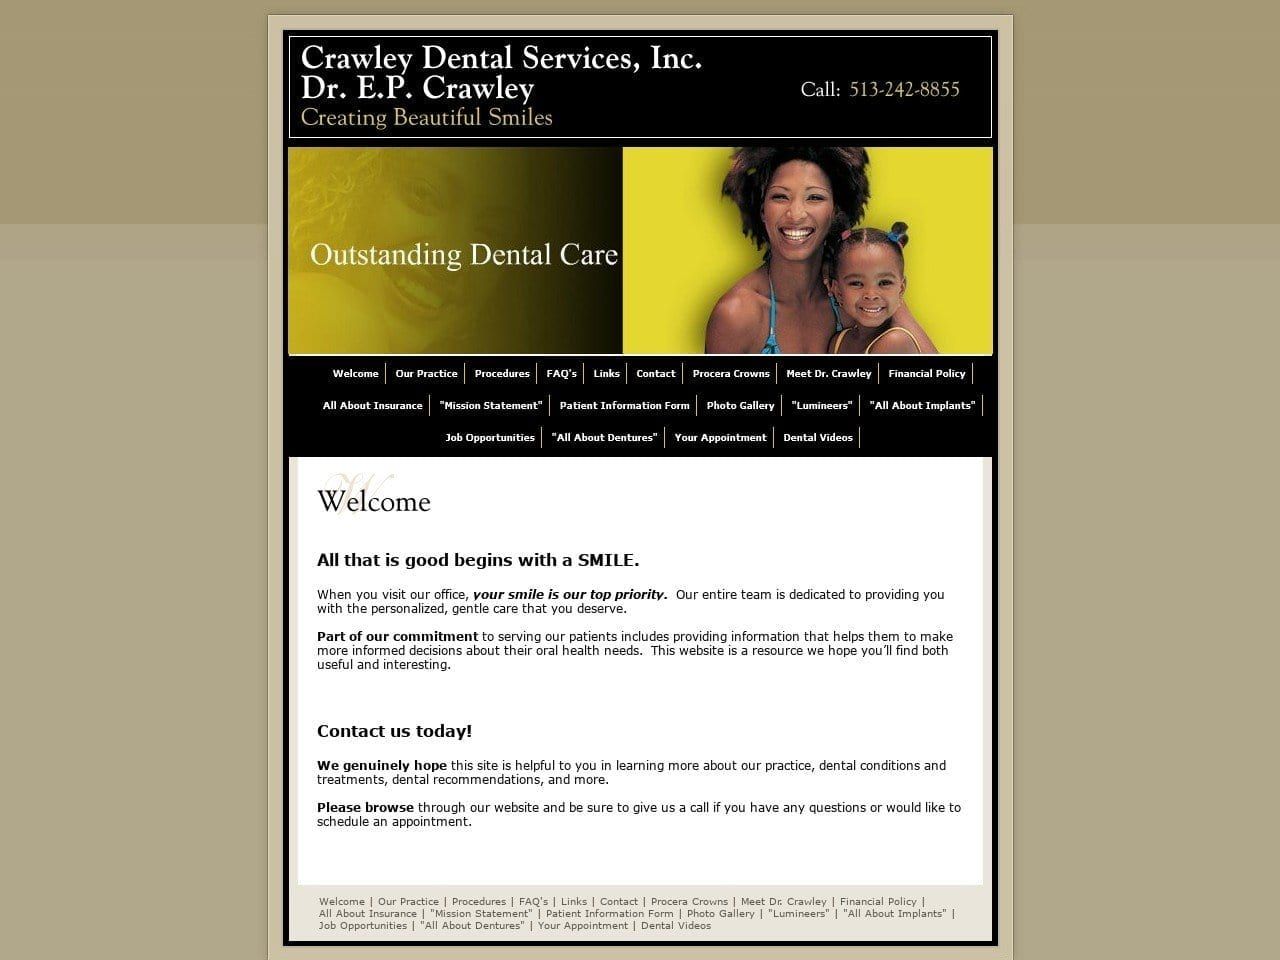 Crawley Dental Services Inc Website Screenshot from crawleydental.com